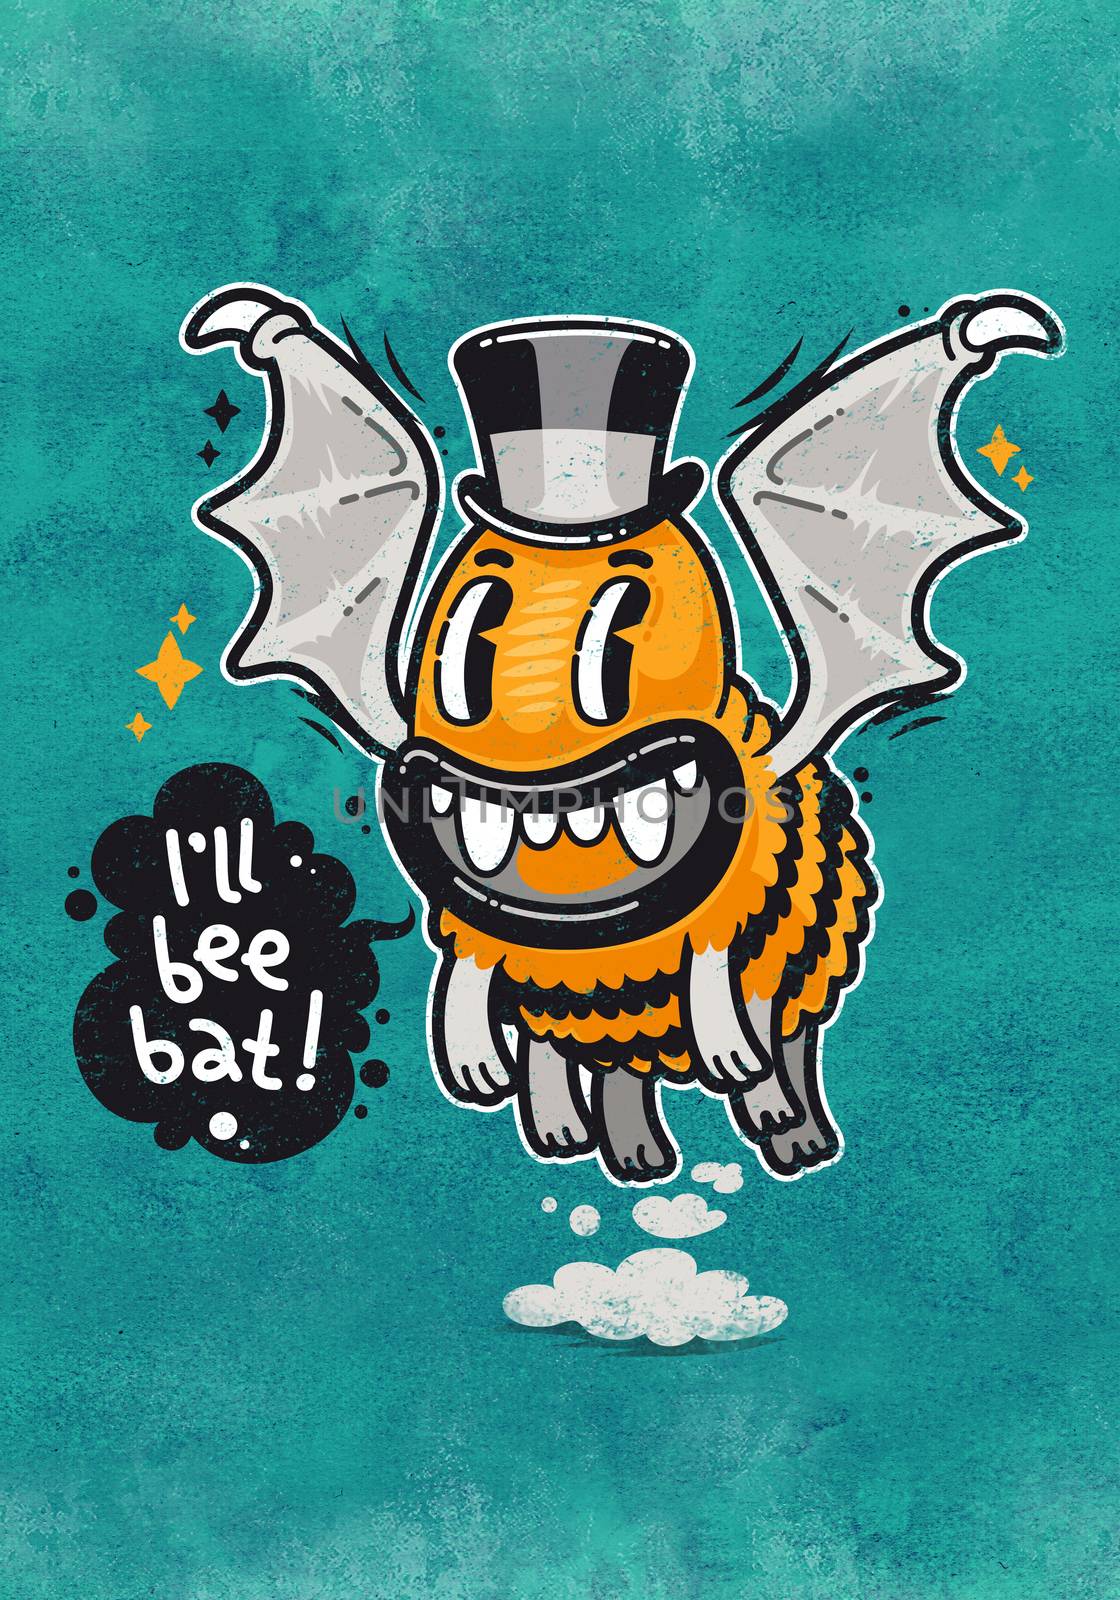 Cartoon Monster I'll Bee Bat. Illustration for poster or postcard.